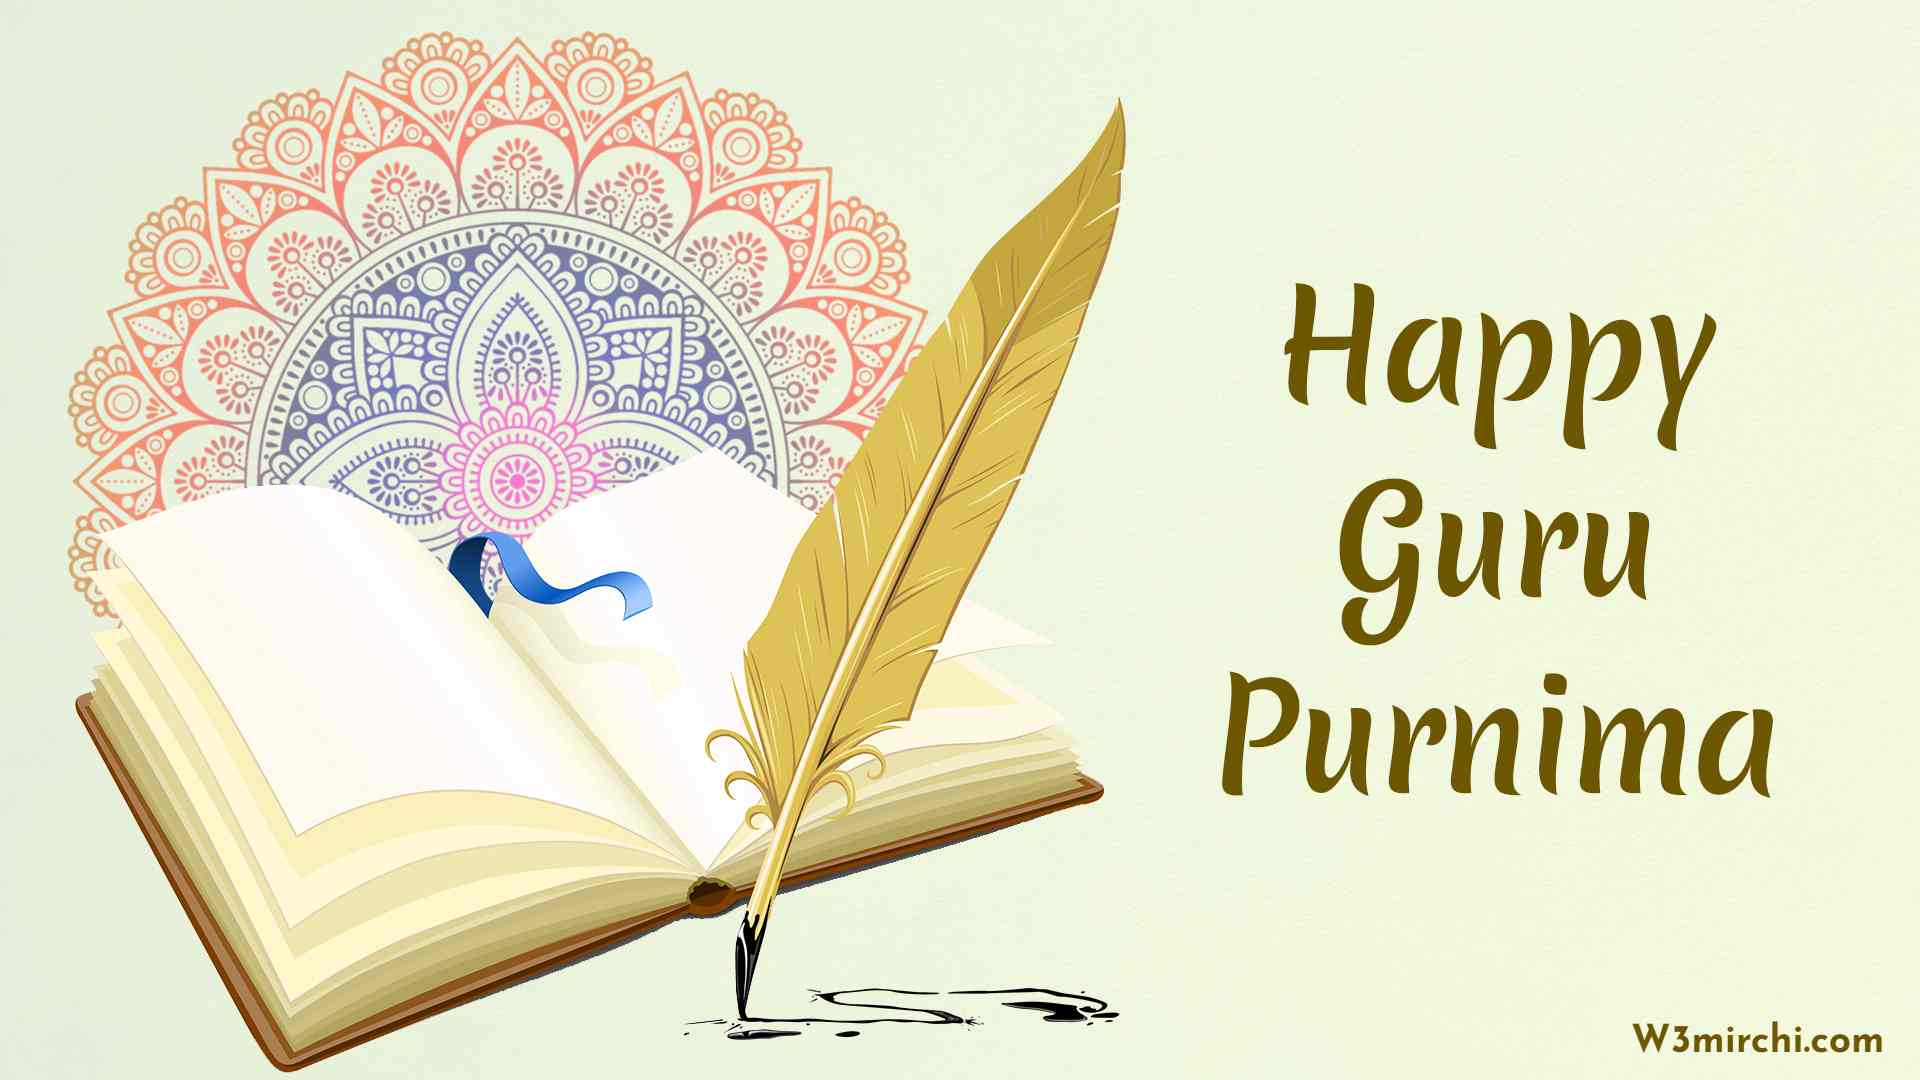 Happy Guru Purnima image - Guru Purnima Images